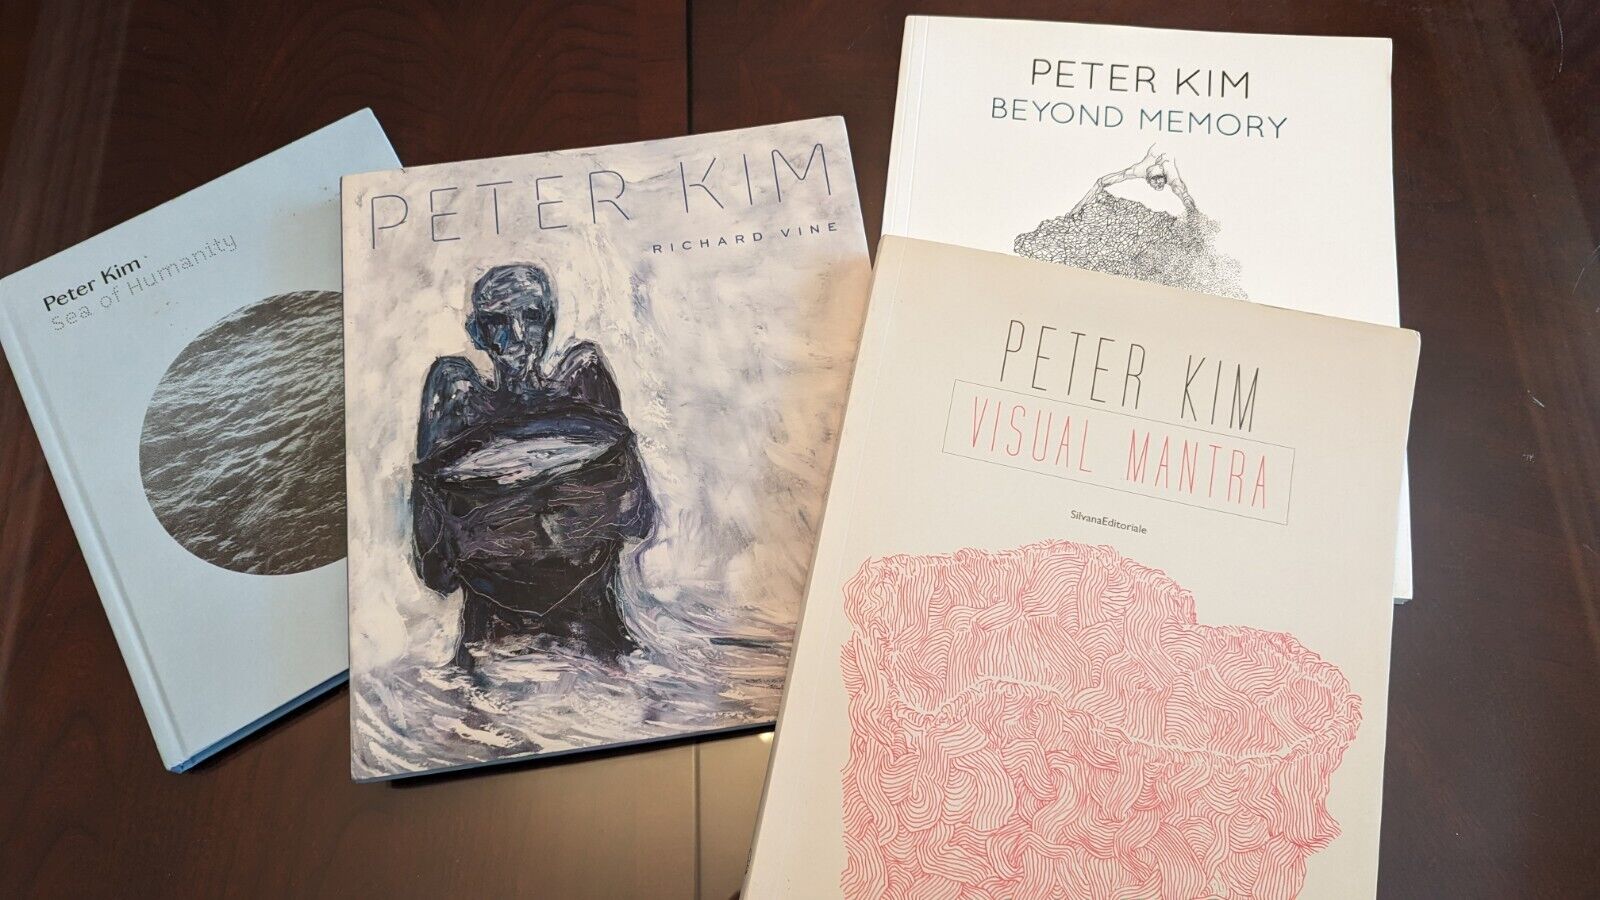 Peter Kim Visual Artist Lot Mantra Sea Humanity Beyond Memory Richard Vine